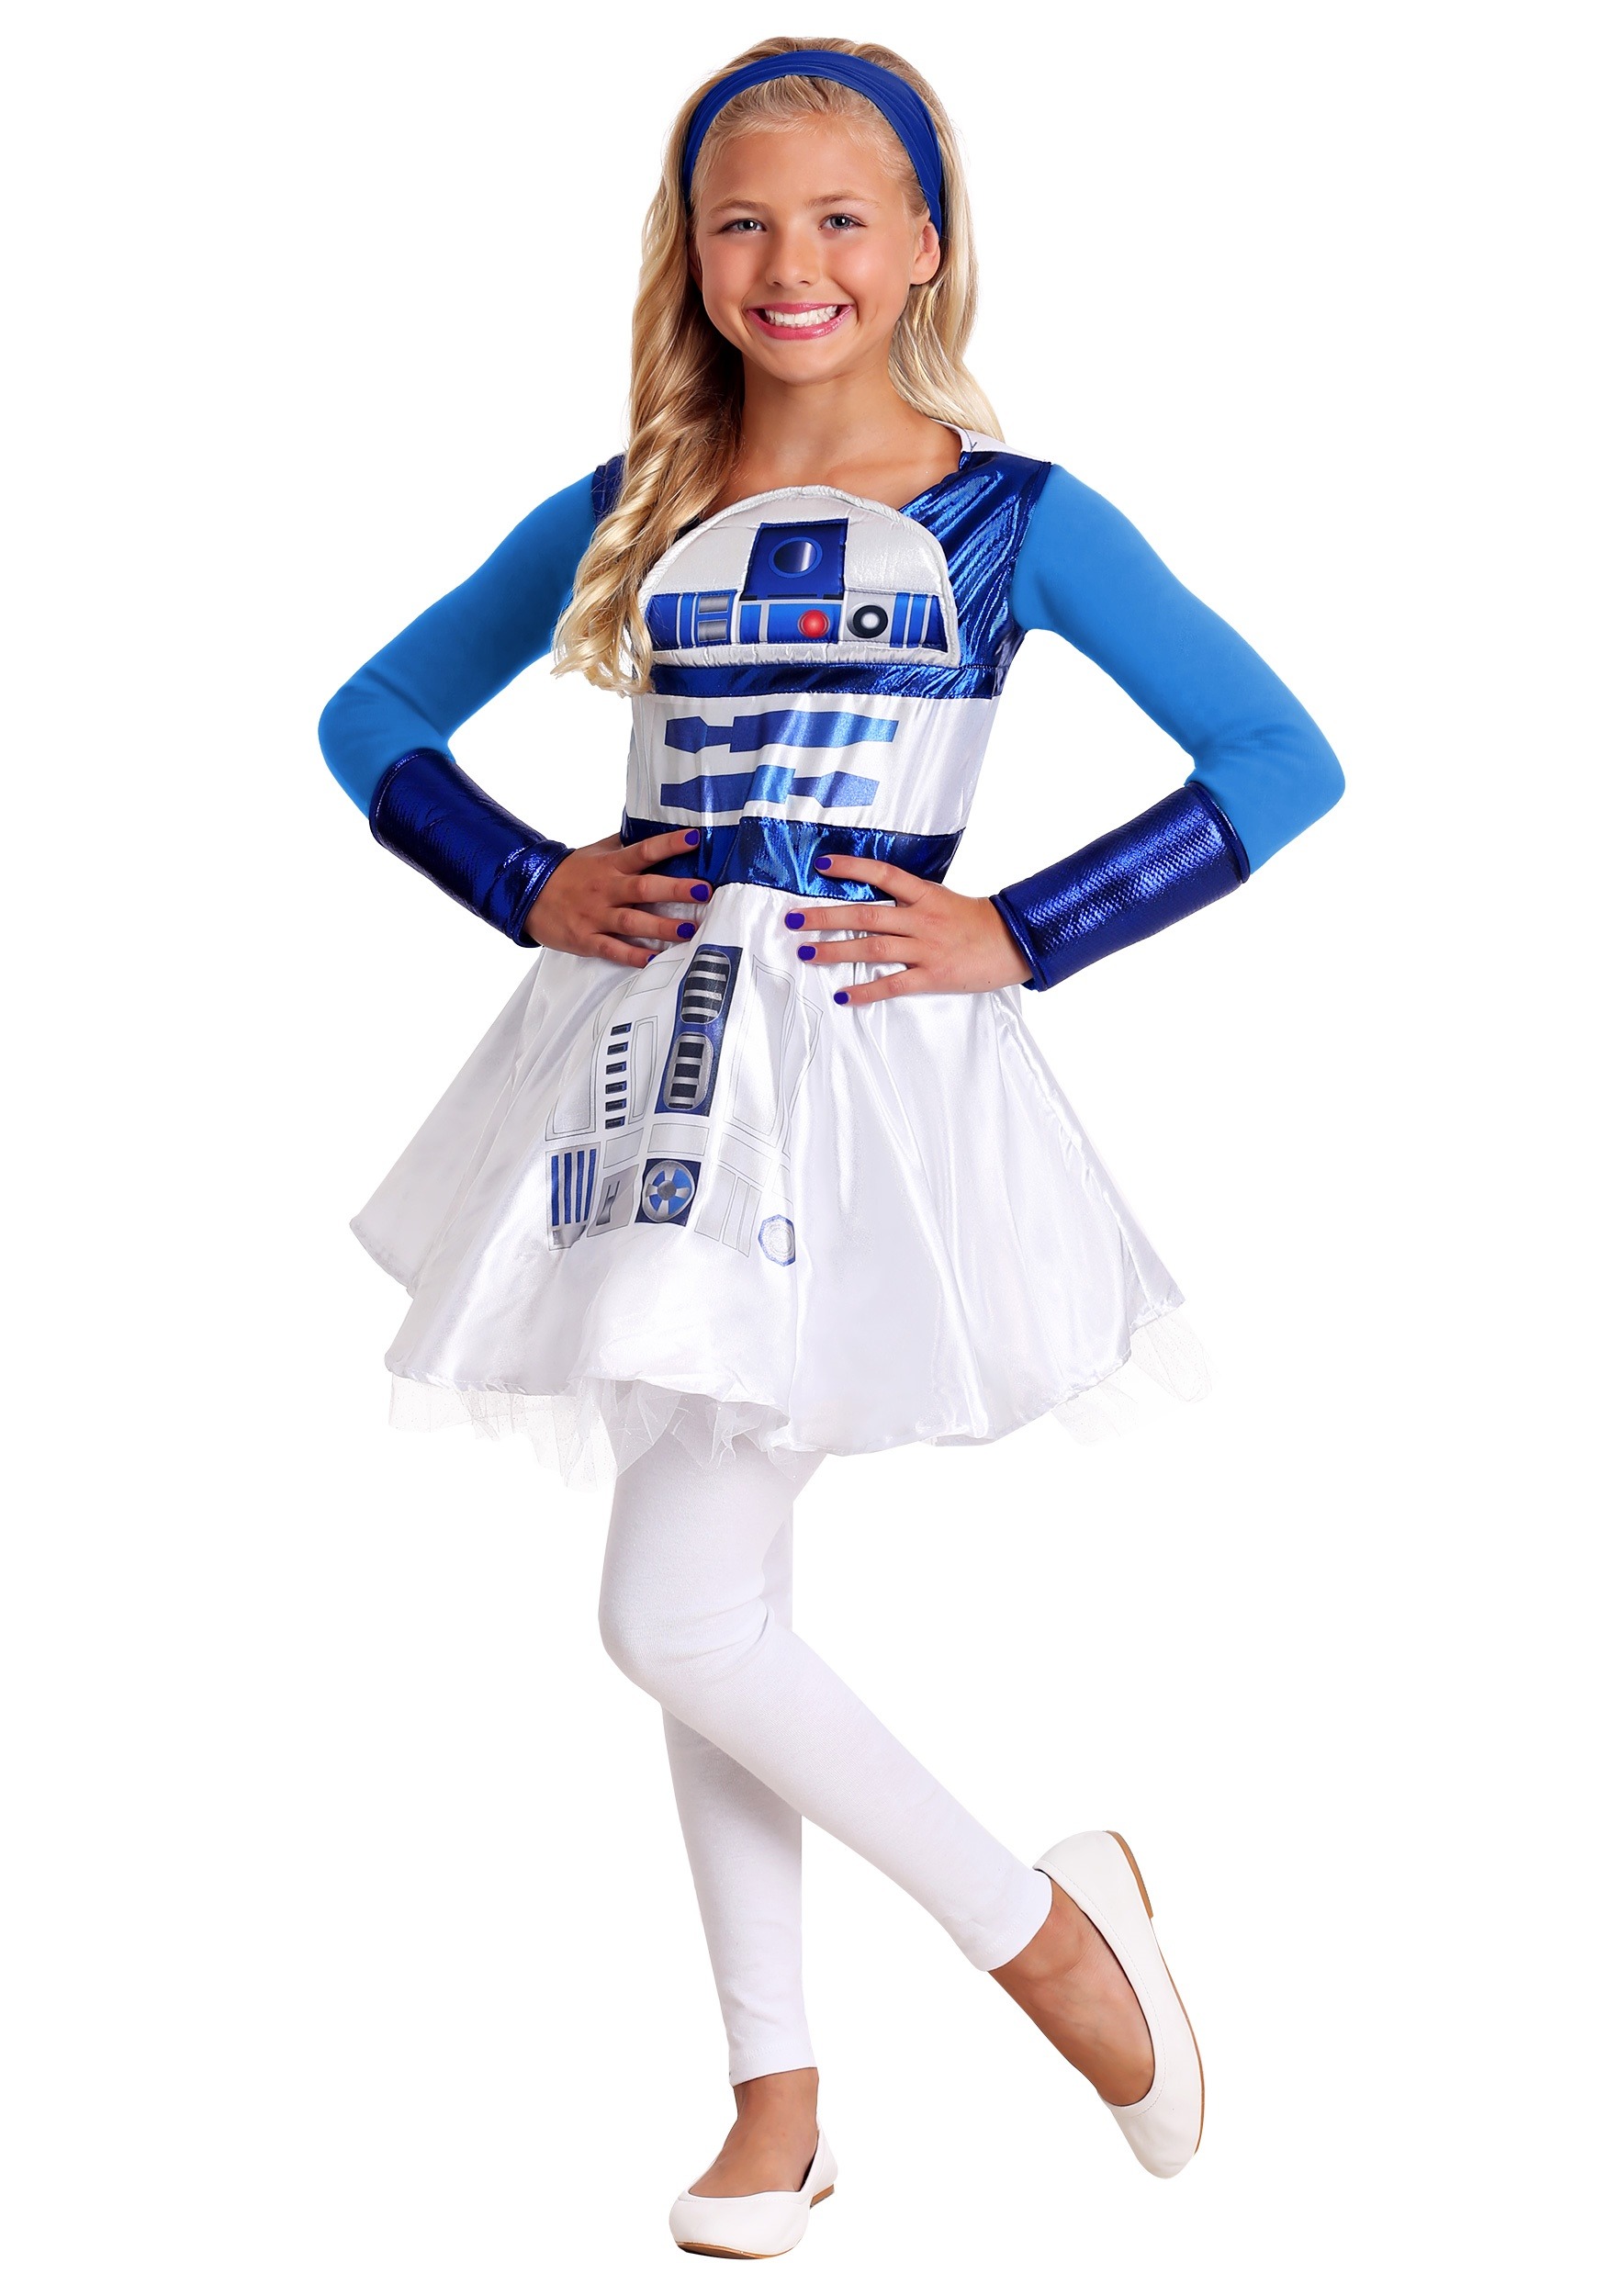 Girls R2D2 Star Wars Dress Costume